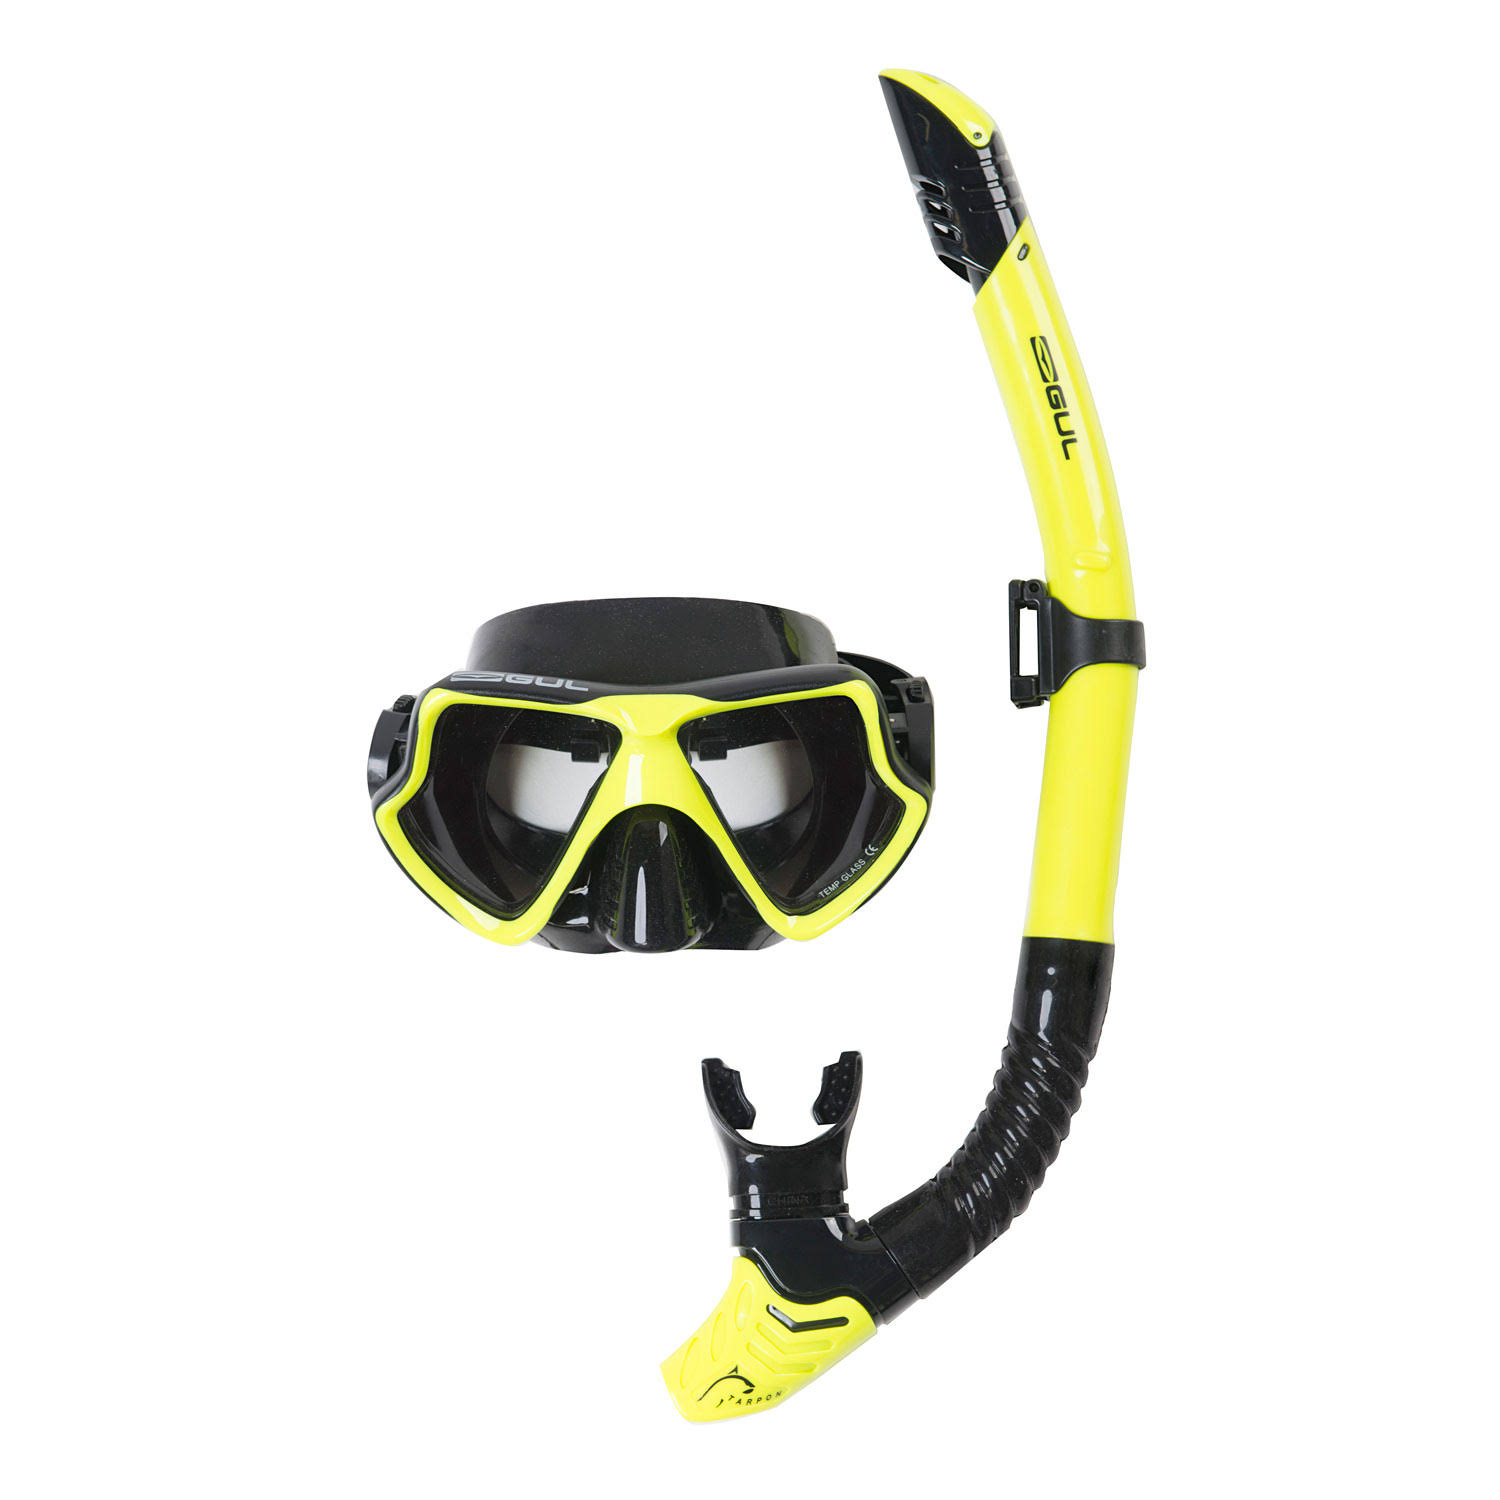 Gul Tarpon Adult Dive Snorkel and Mask Set - Yellow/Black